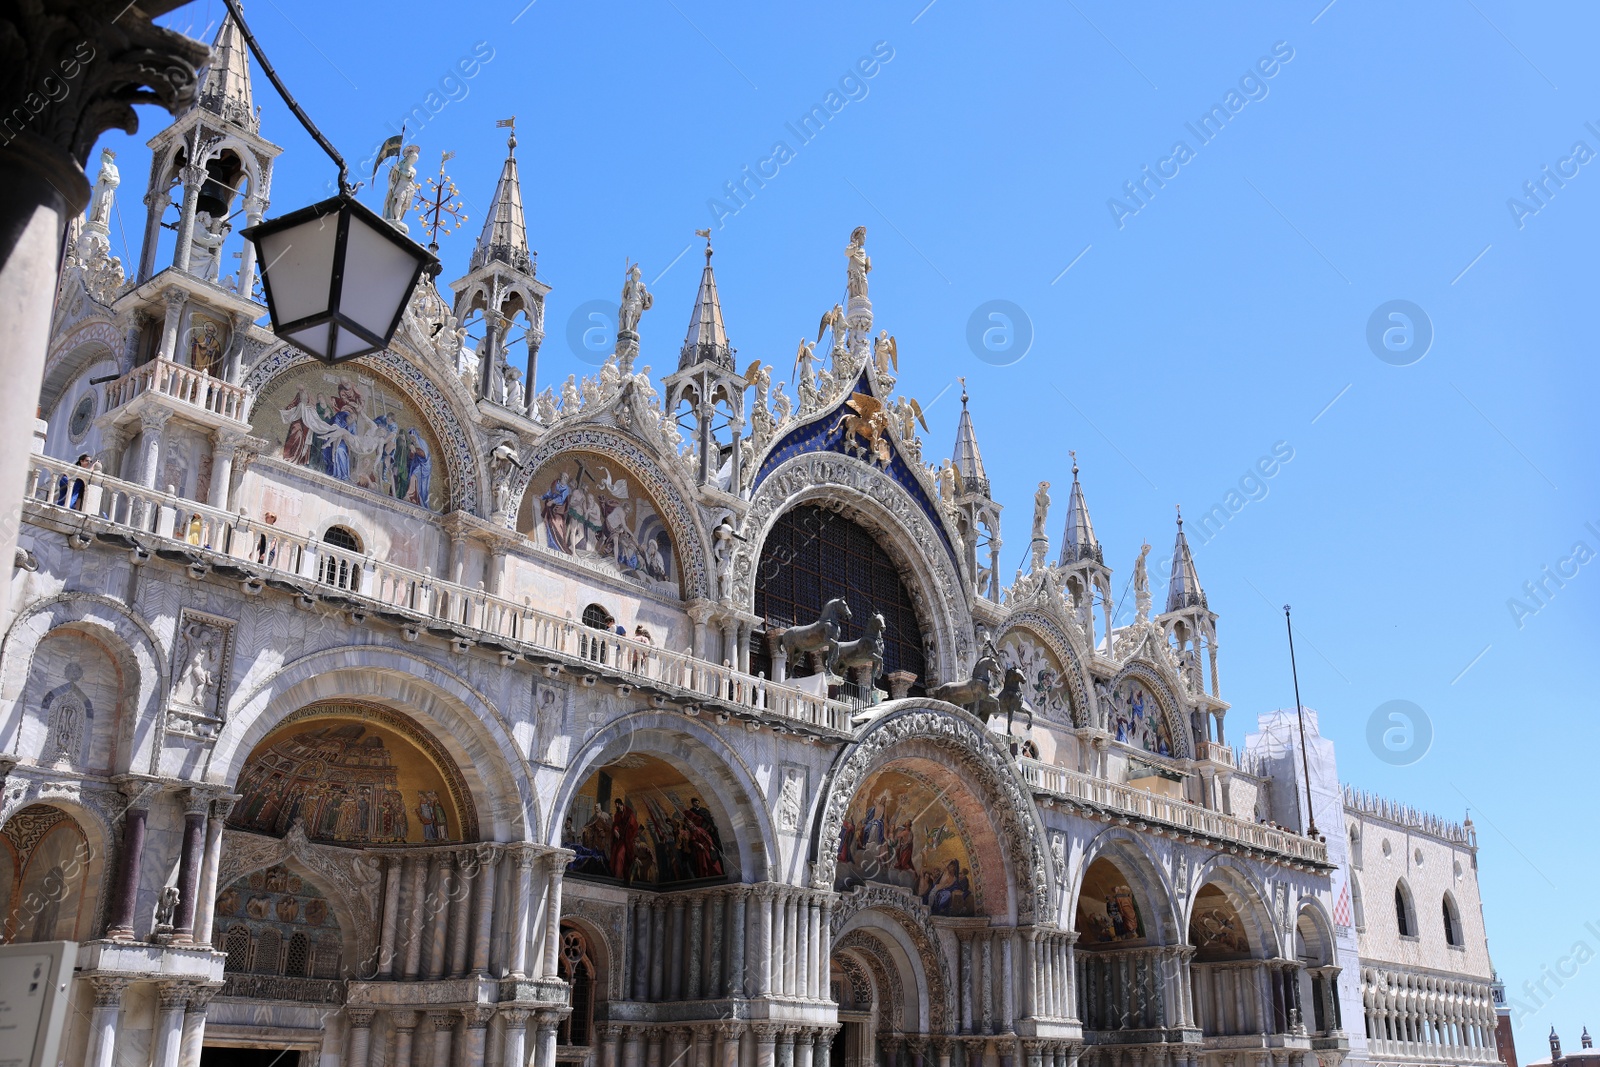 Photo of VENICE, ITALY - JUNE 13, 2019: Exterior of Saint Mark's Basilica